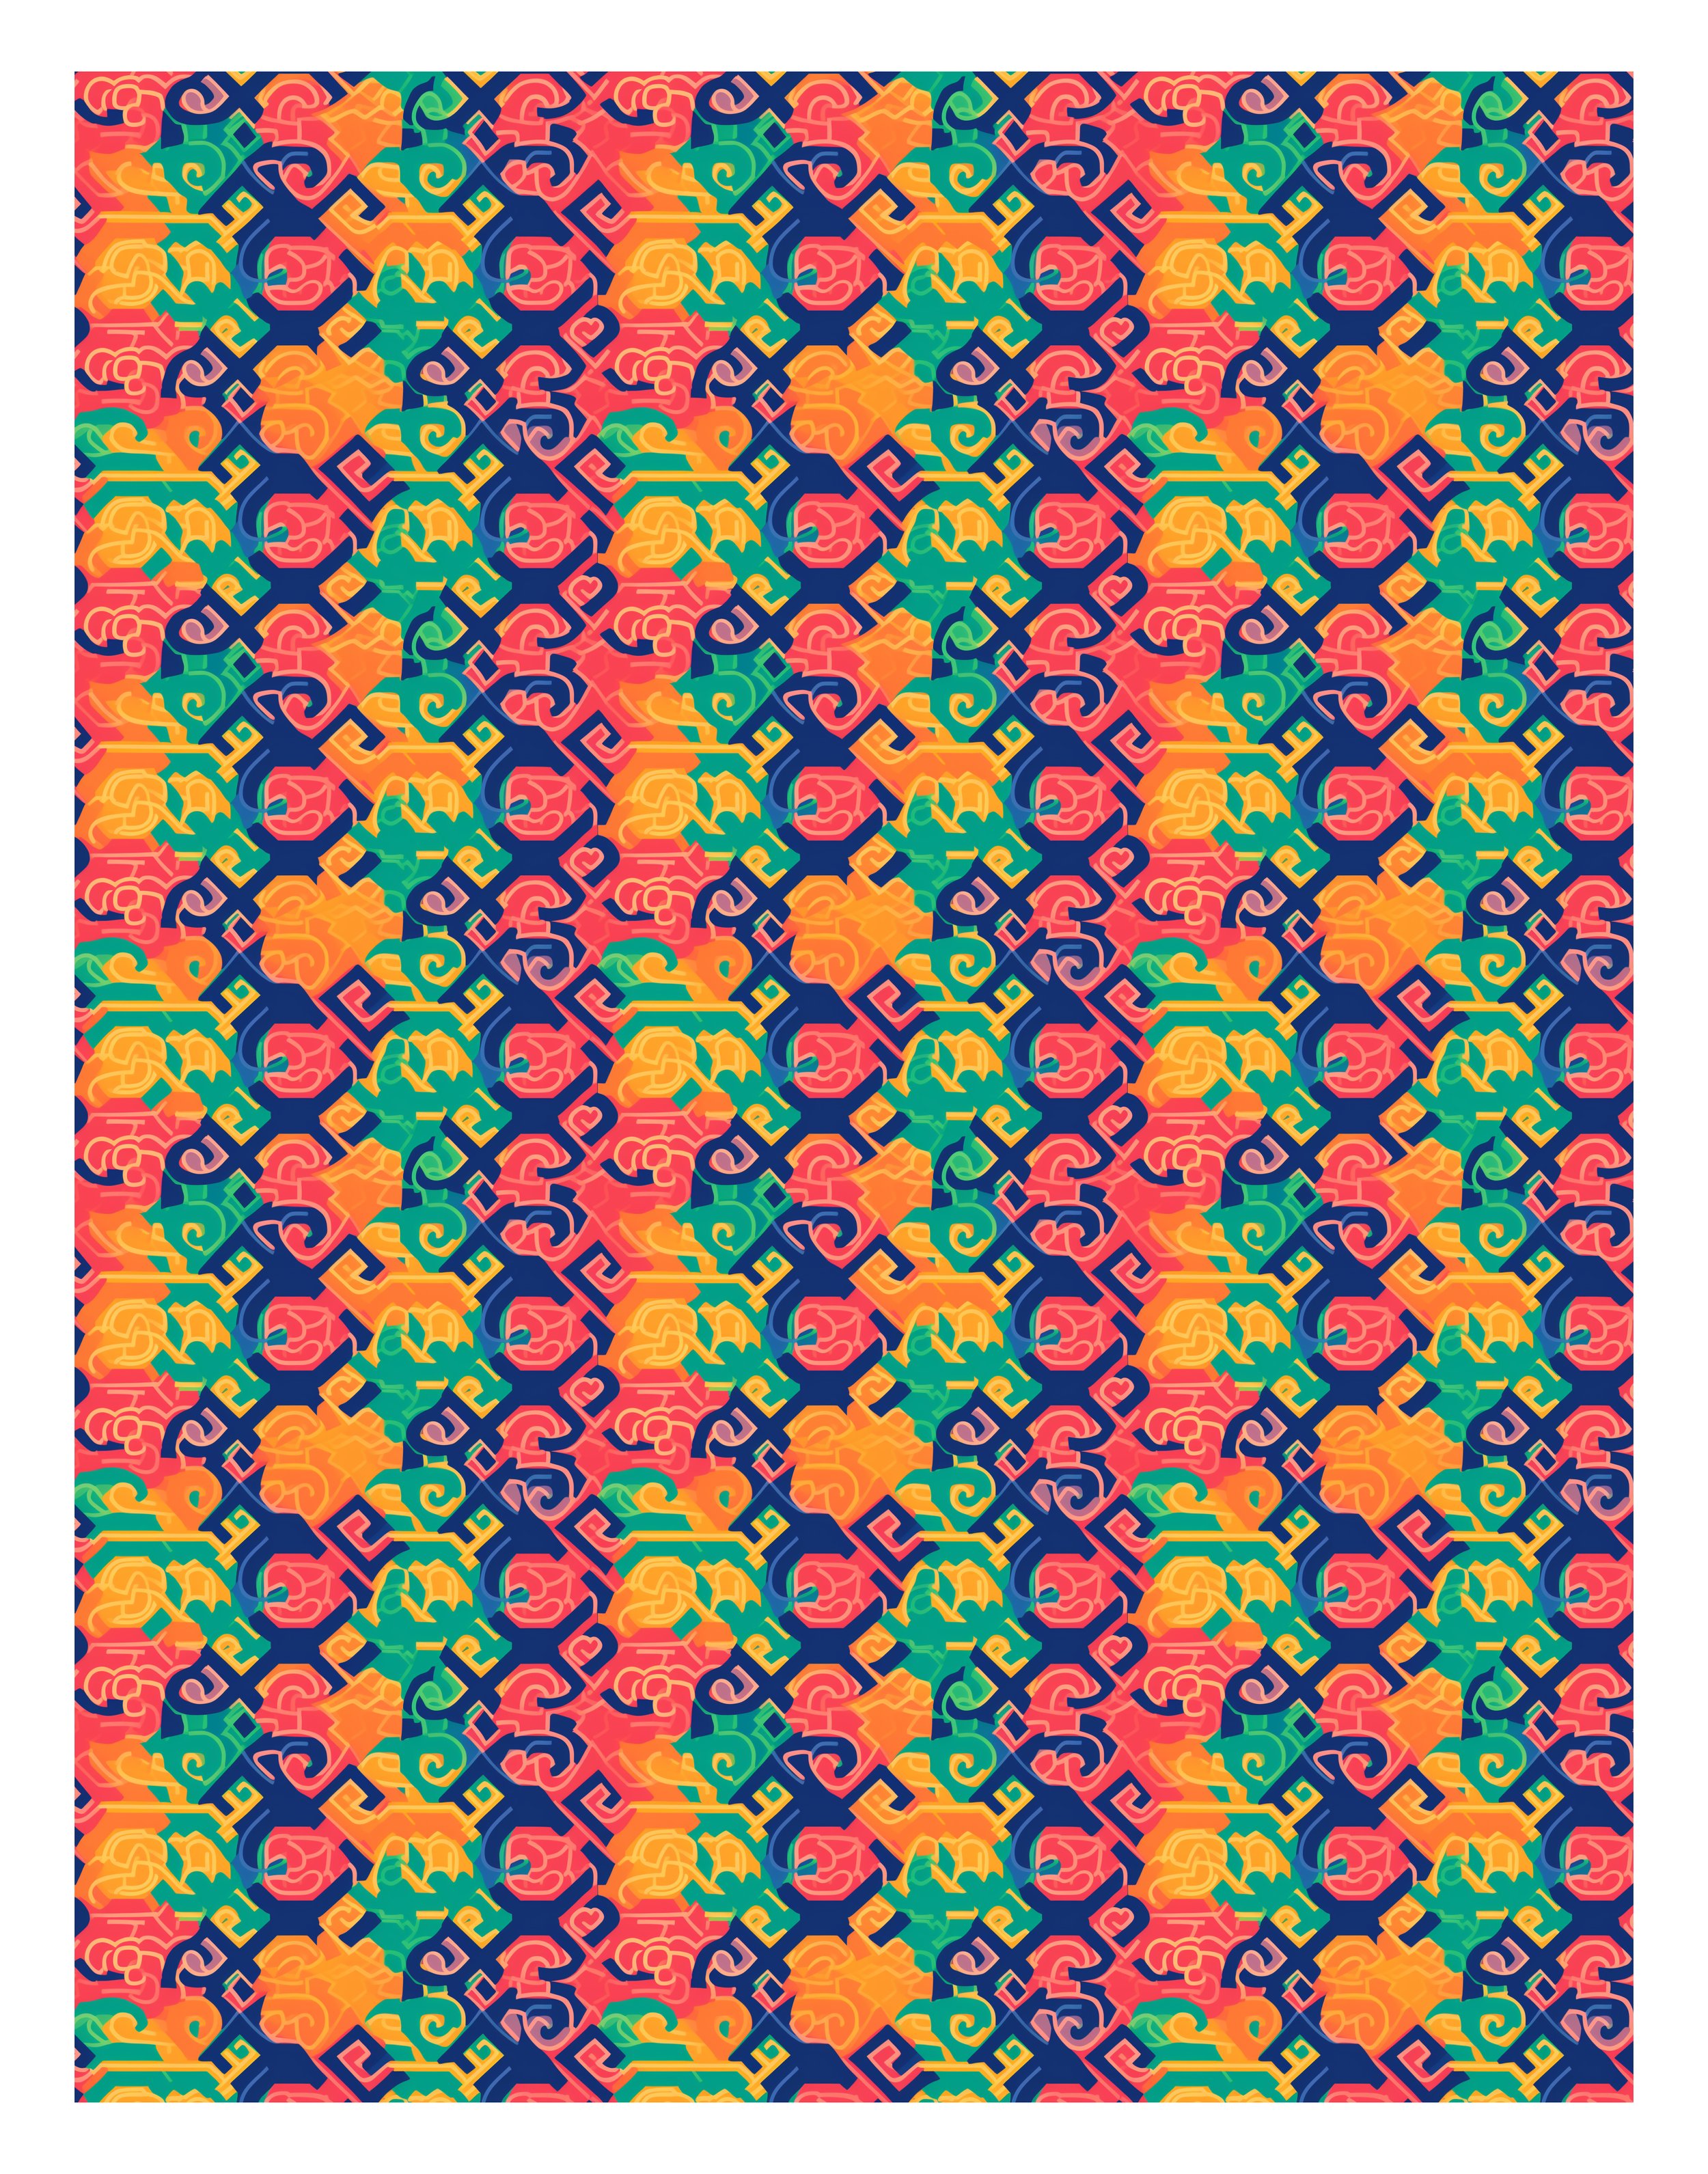 pattern1.jpg